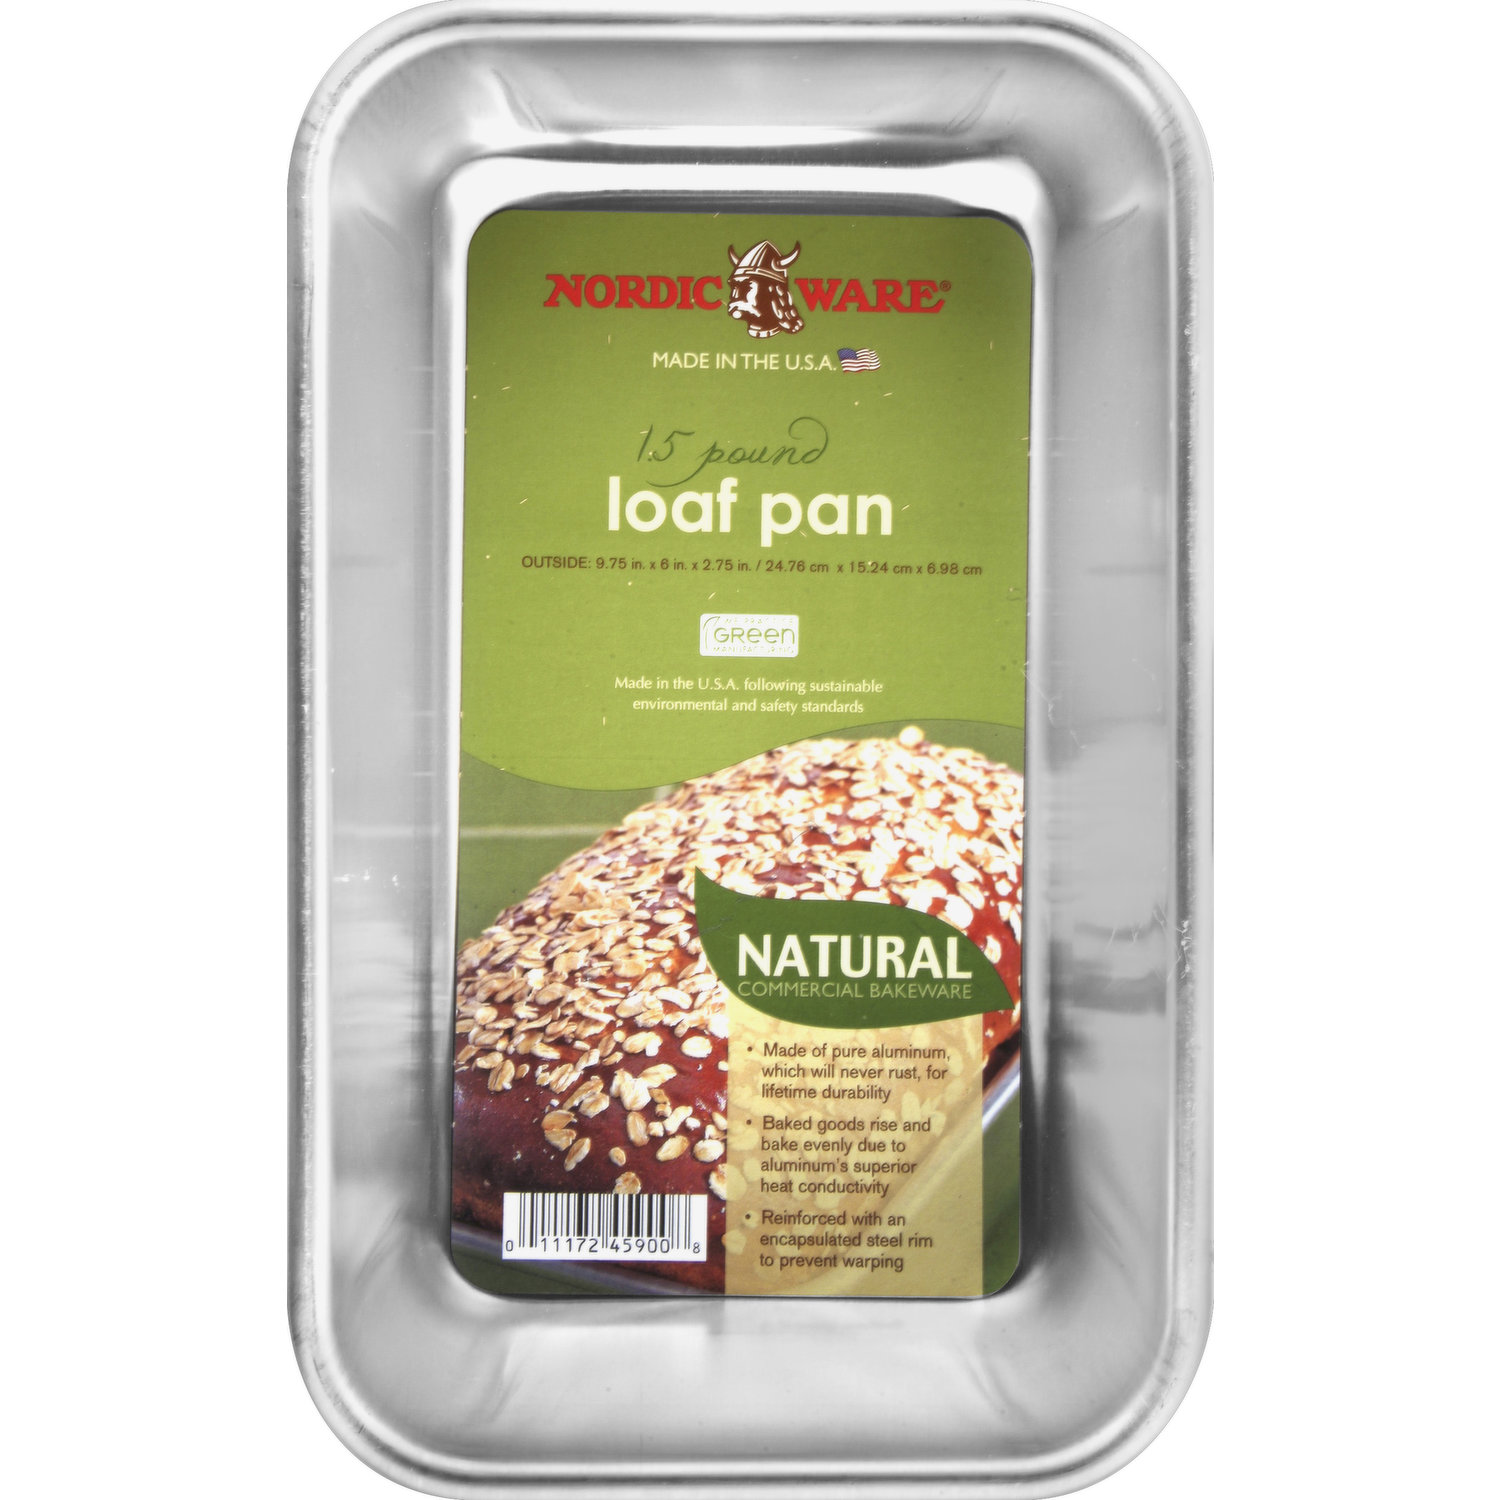 Naturals® 1.5 Pound Loaf Pan